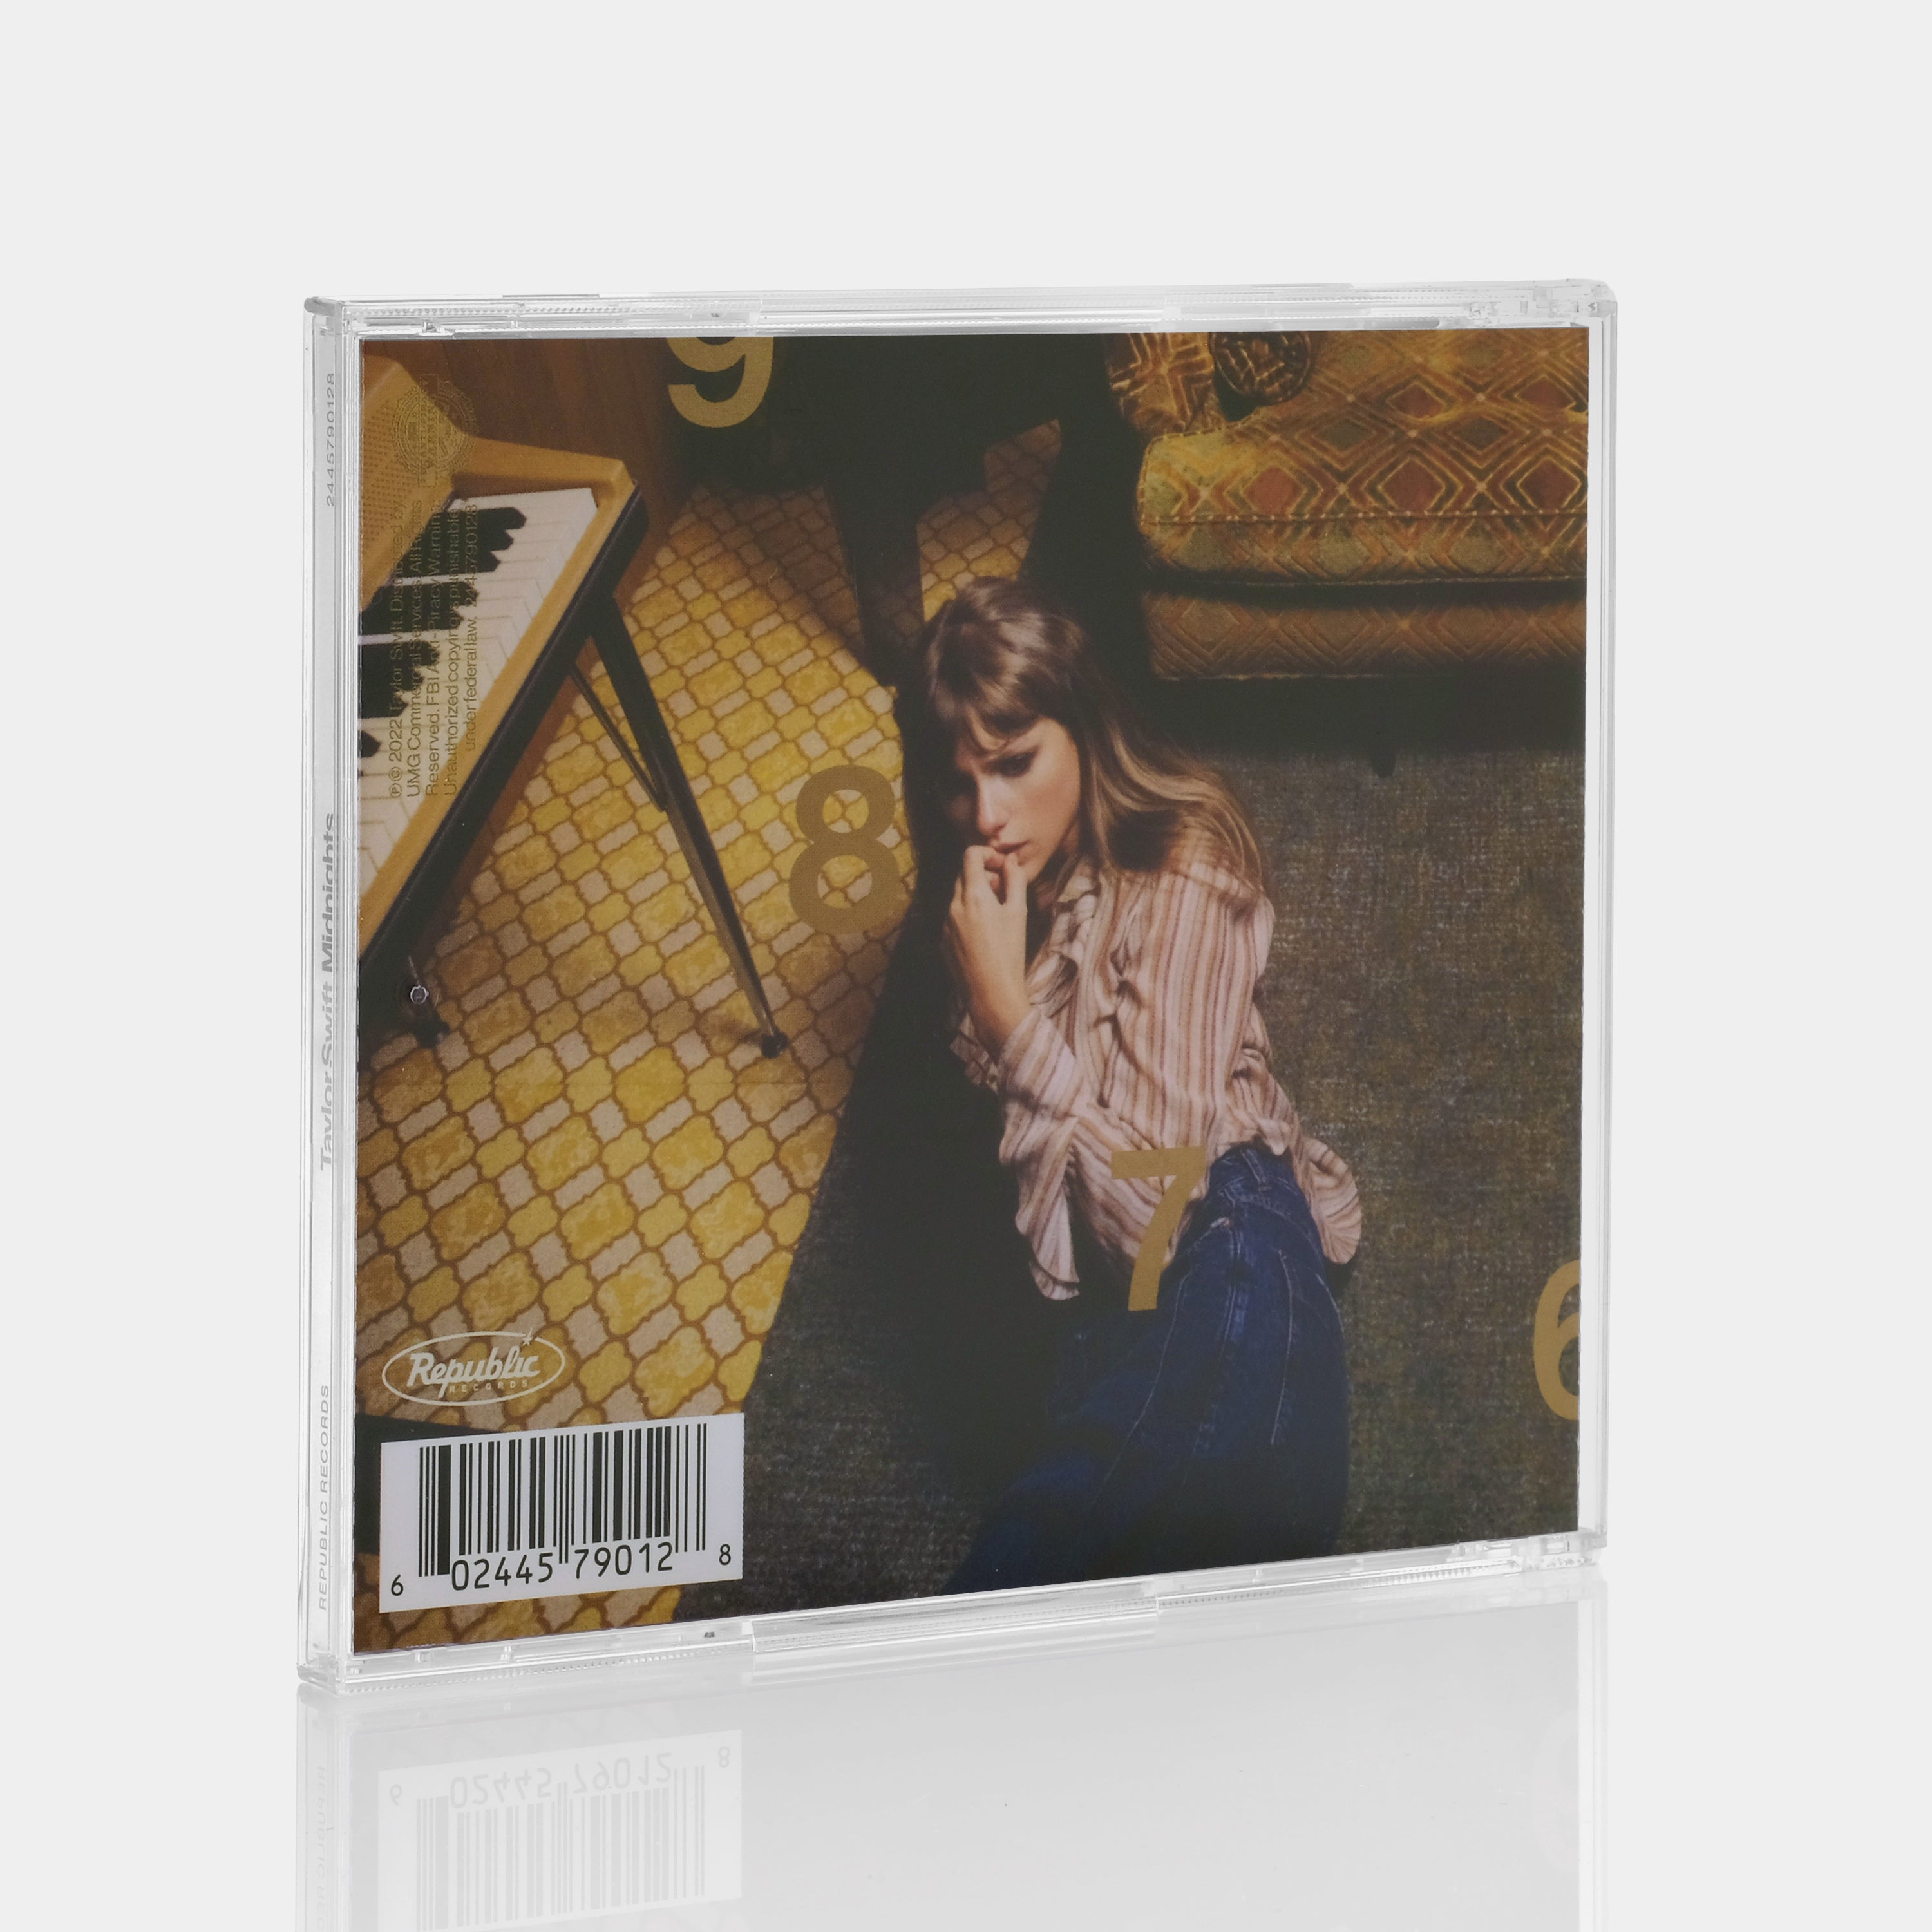 Taylor Swift - Midnights Mahogany CD (Explicit)